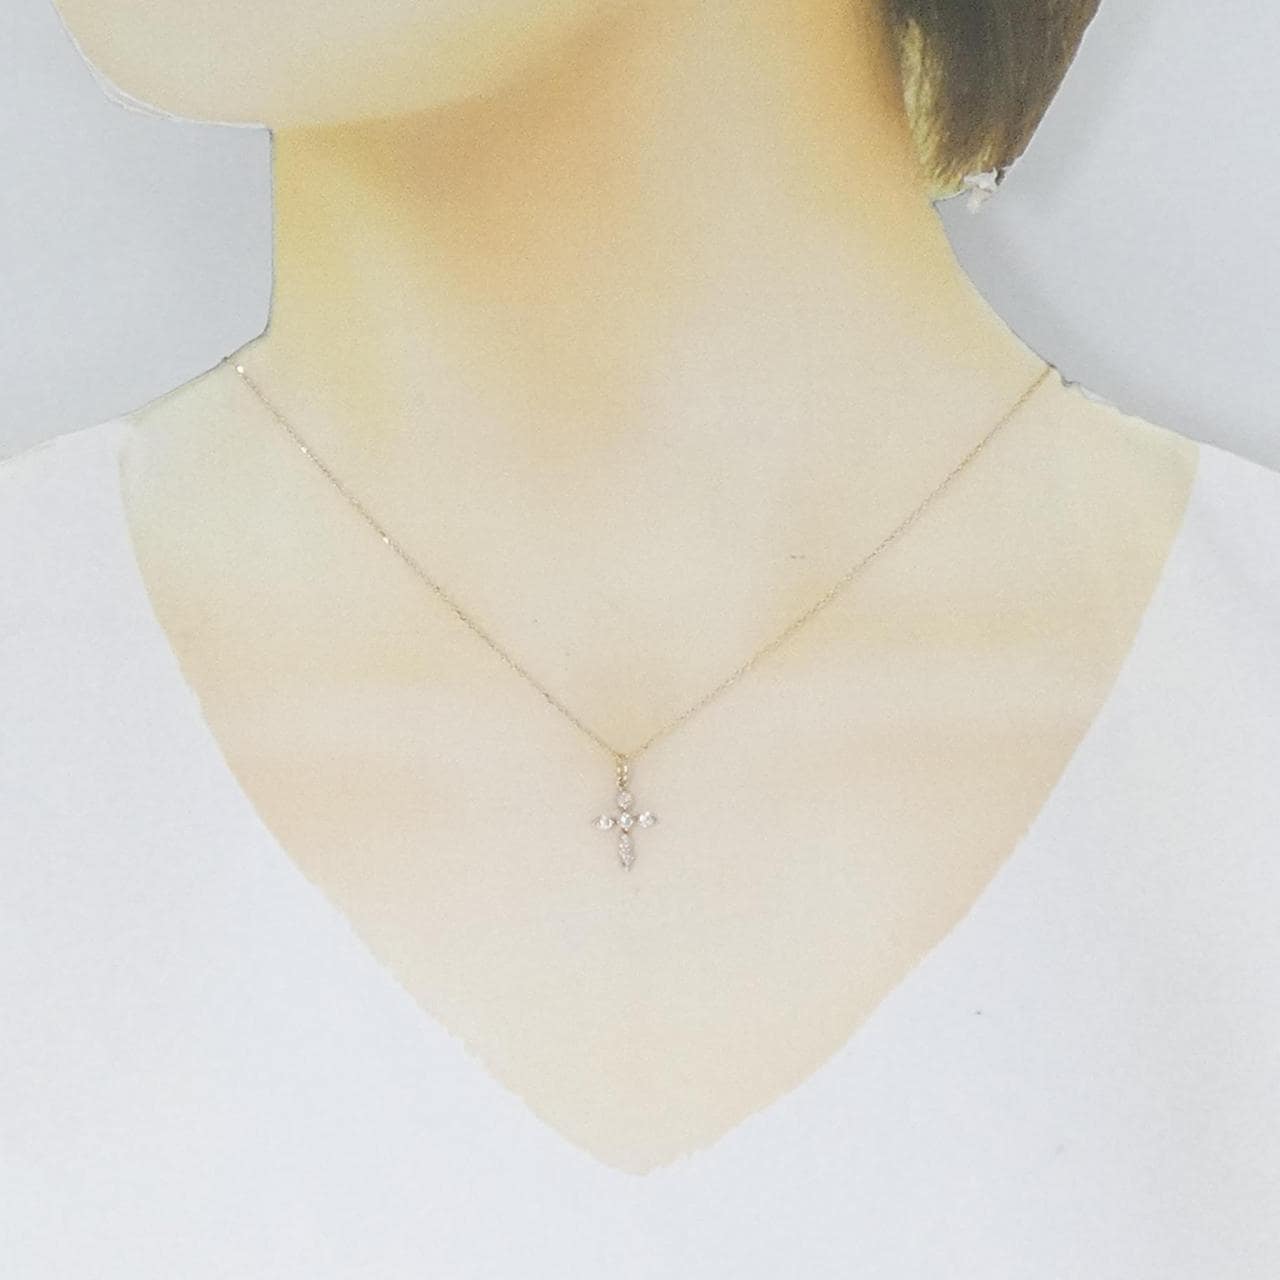 K10PG cross Diamond necklace 0.18CT